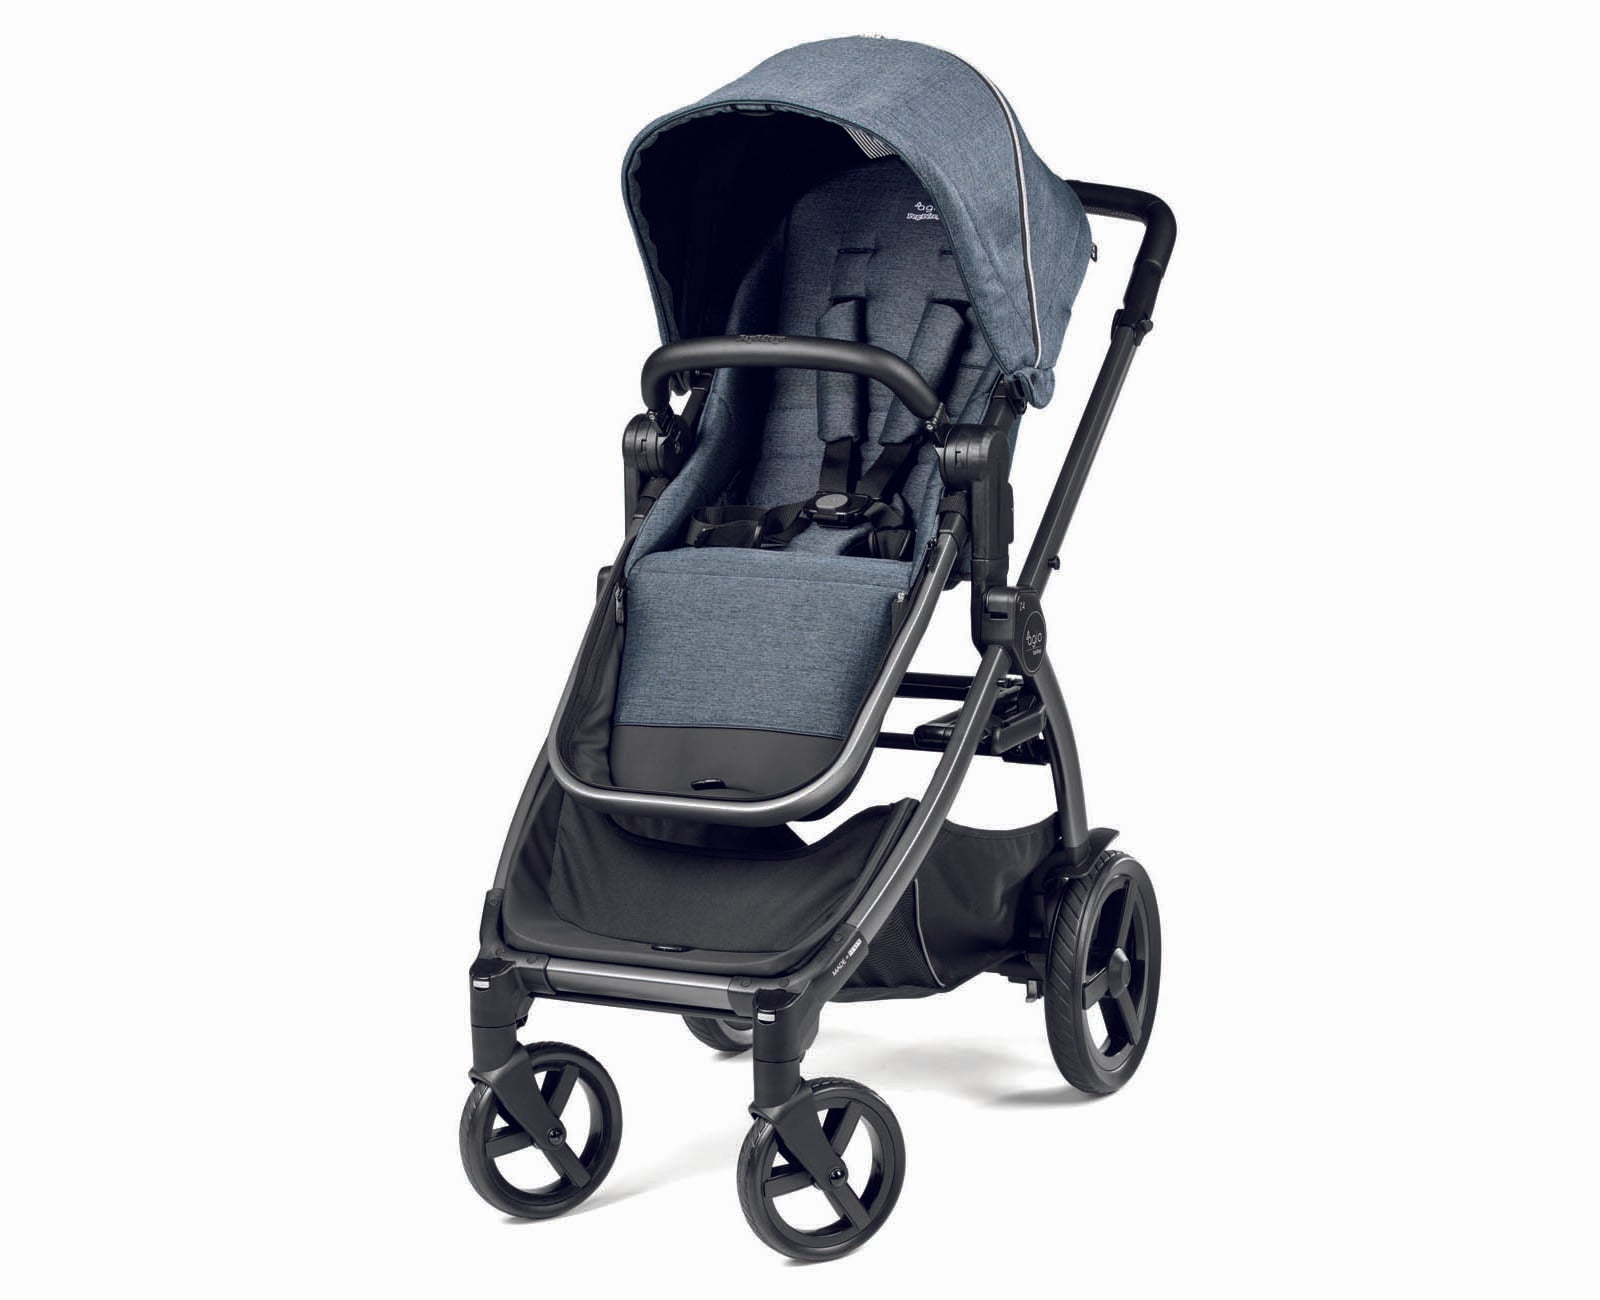 Peg Perego Agio Z4 Double Stroller – Baby Grand